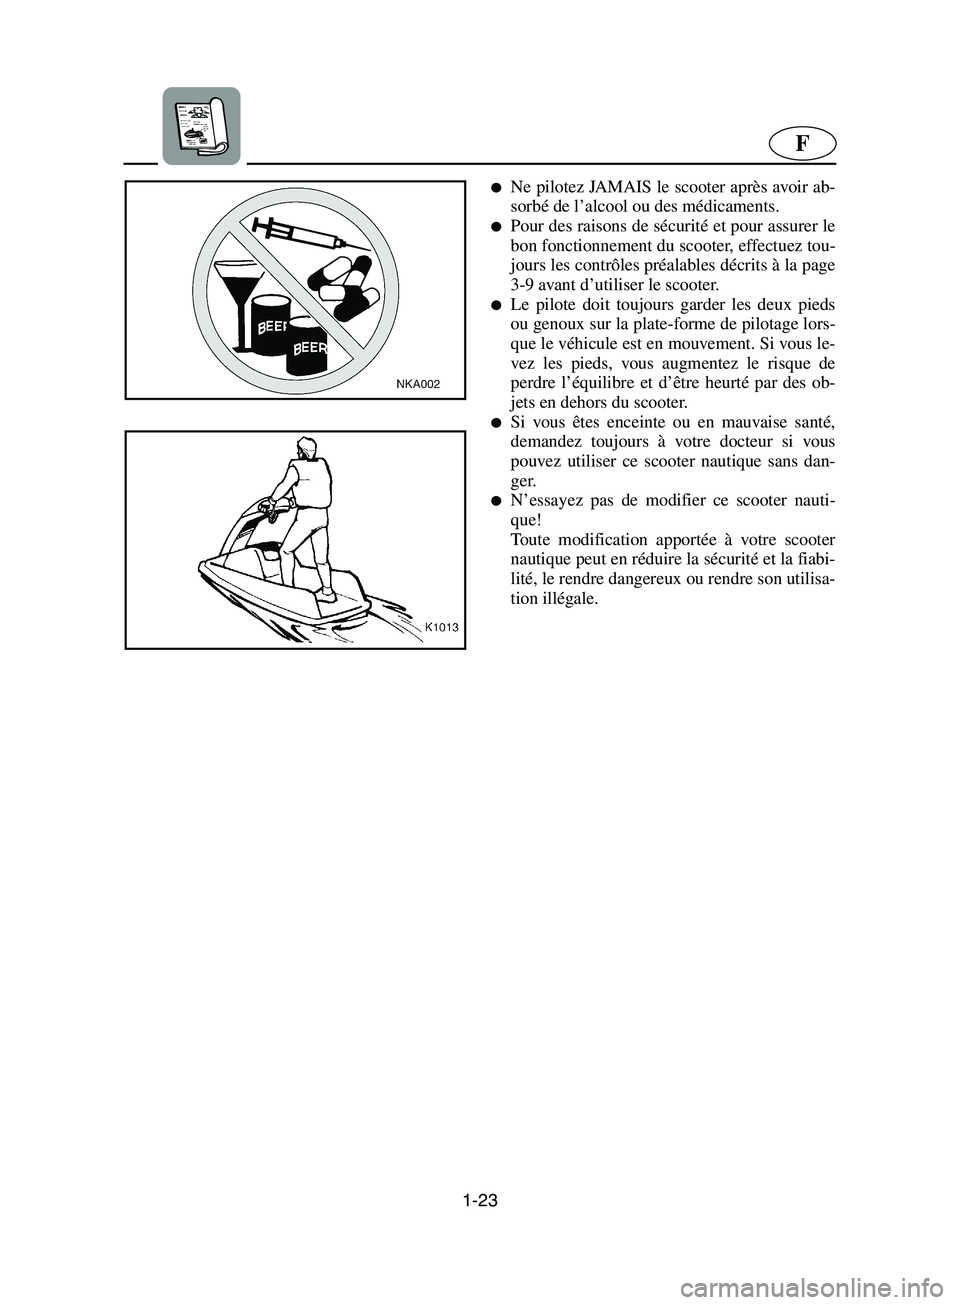 YAMAHA SUPERJET 2002  Manuale de Empleo (in Spanish) 1-23
F
Ne pilotez JAMAIS le scooter après avoir ab-
sorbé de l’alcool ou des médicaments. 
Pour des raisons de sécurité et pour assurer le
bon fonctionnement du scooter, effectuez tou-
jours 